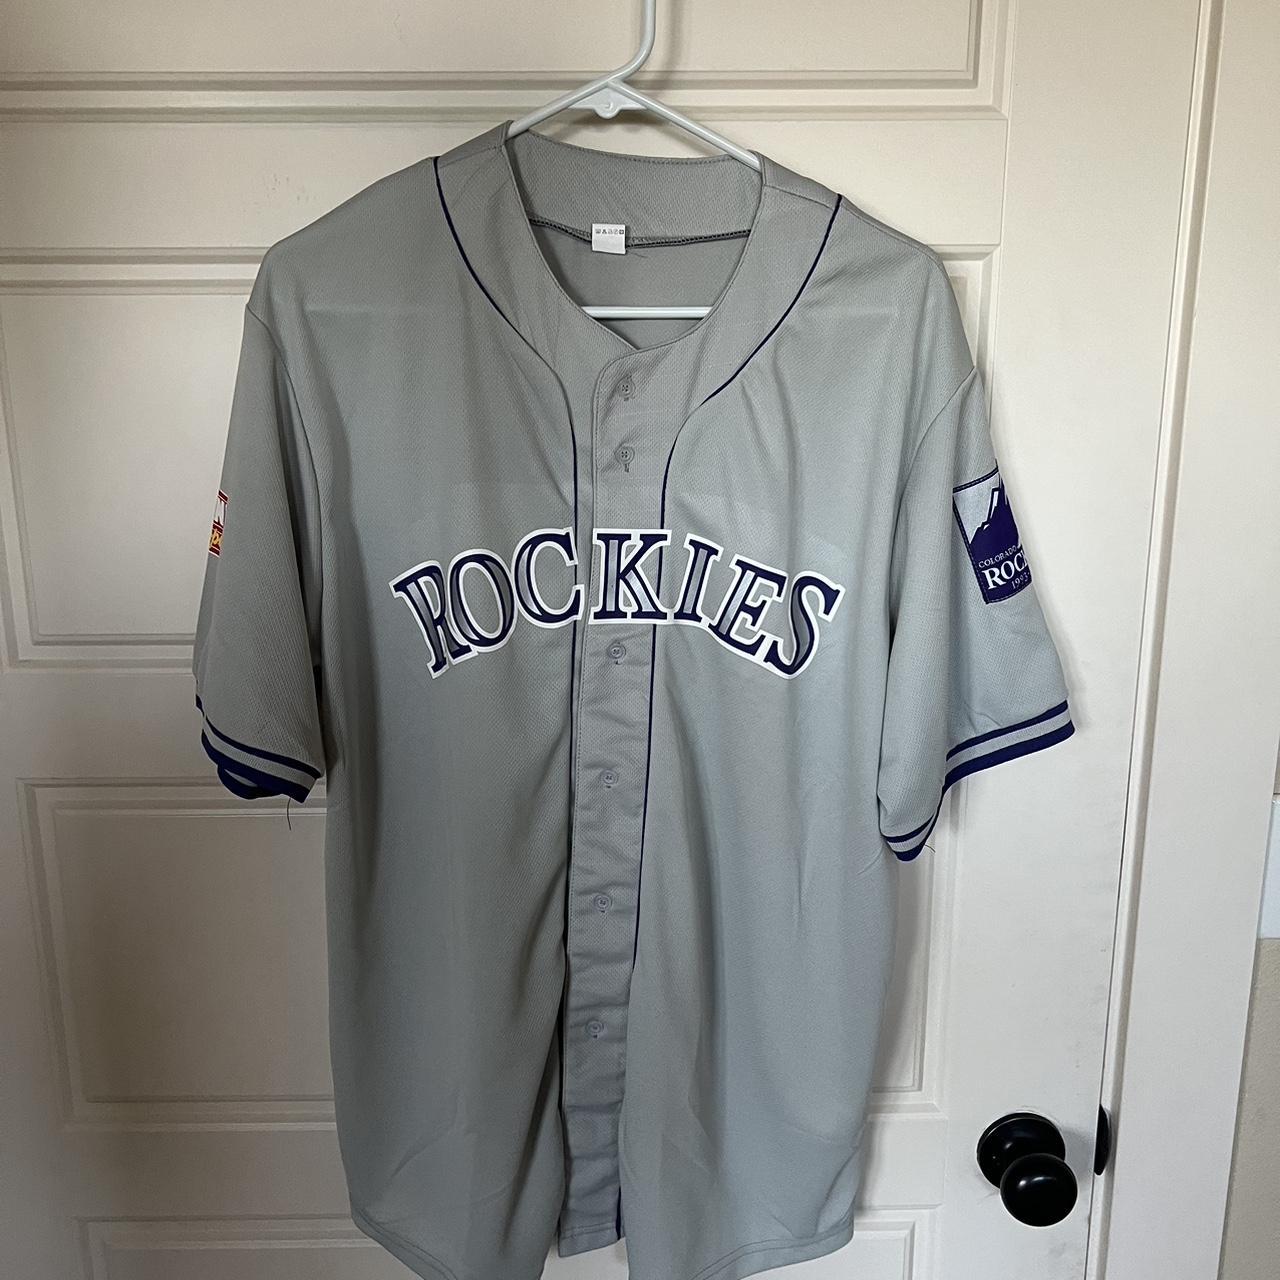 Vintage MLB (Russell Athletic) - Colorado Rockies Baseball Jersey